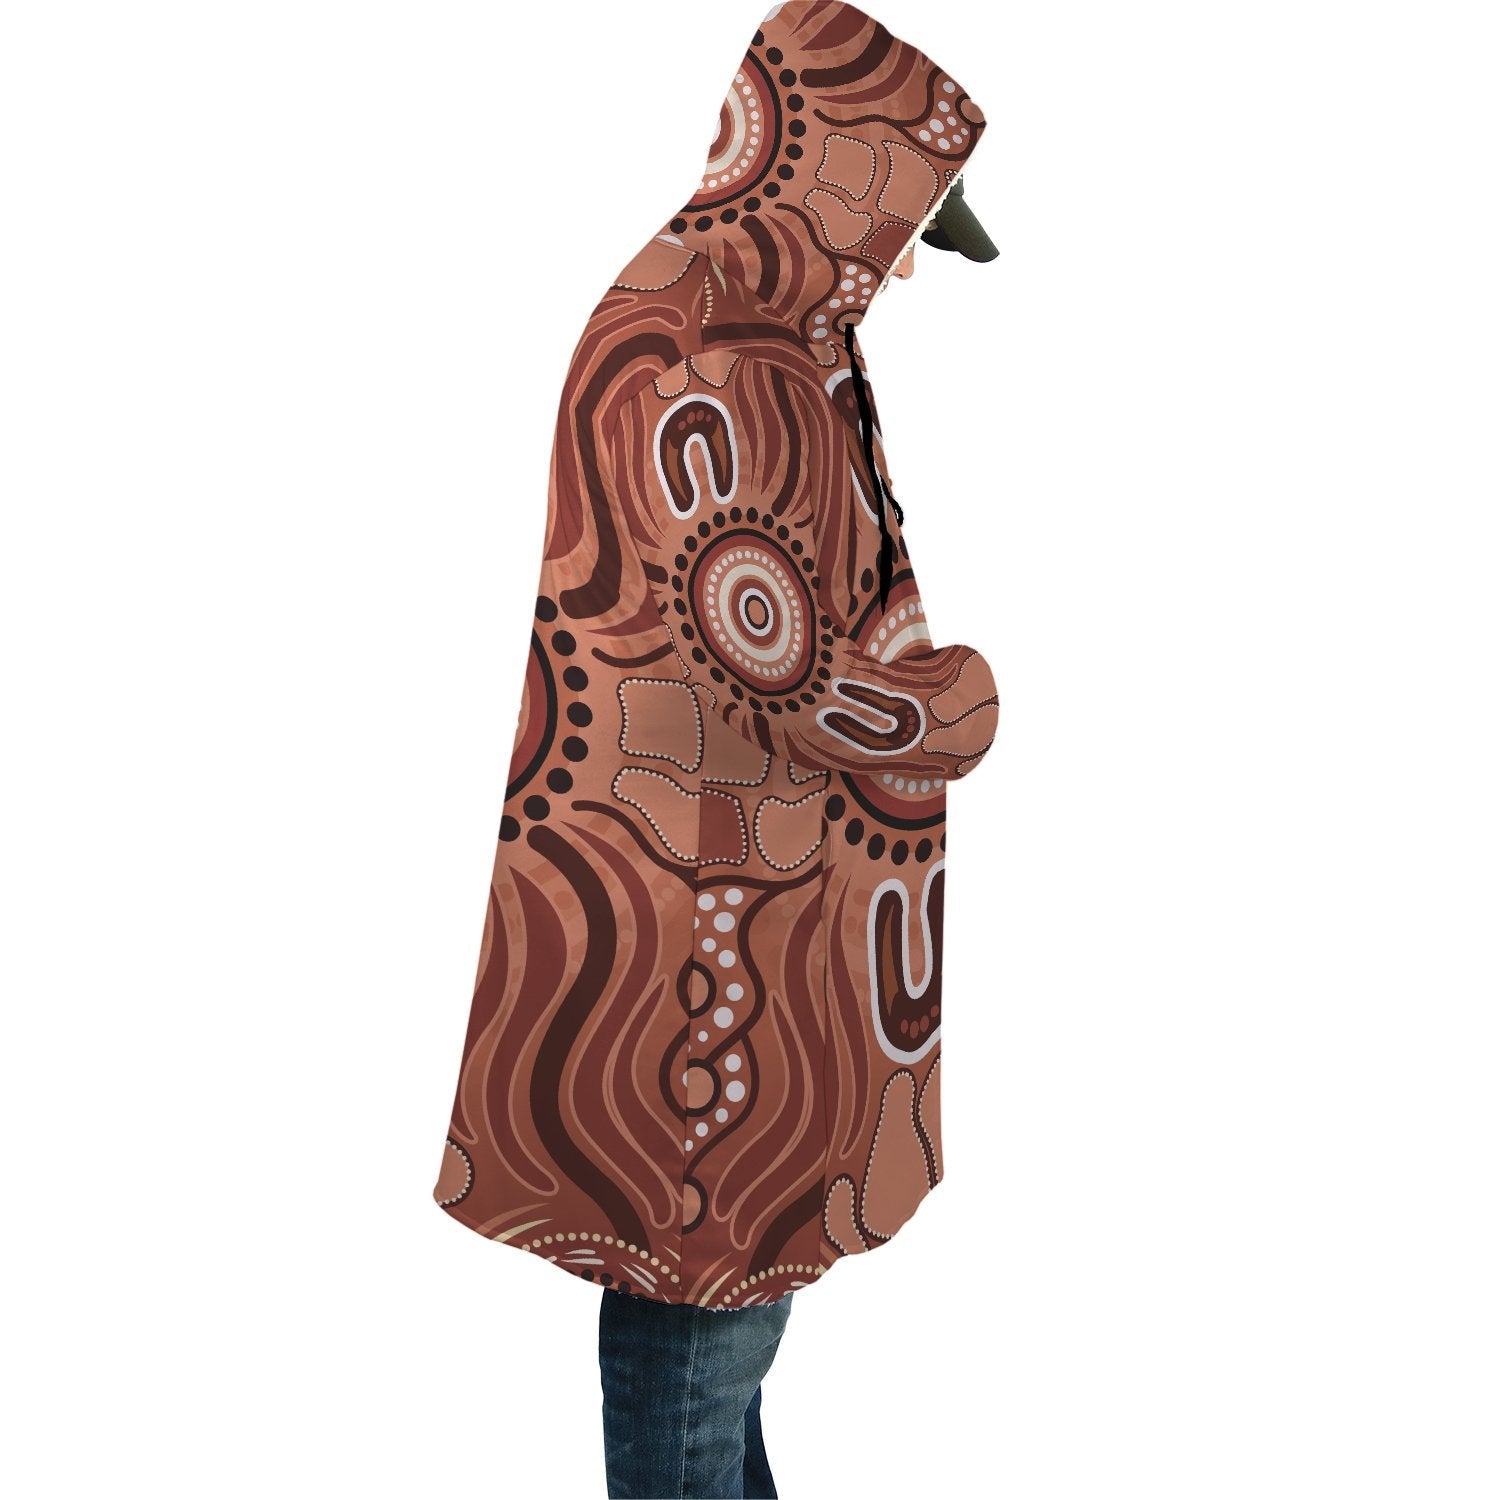 Aboriginal Cloak - Indigenous Art Patterns Ver02